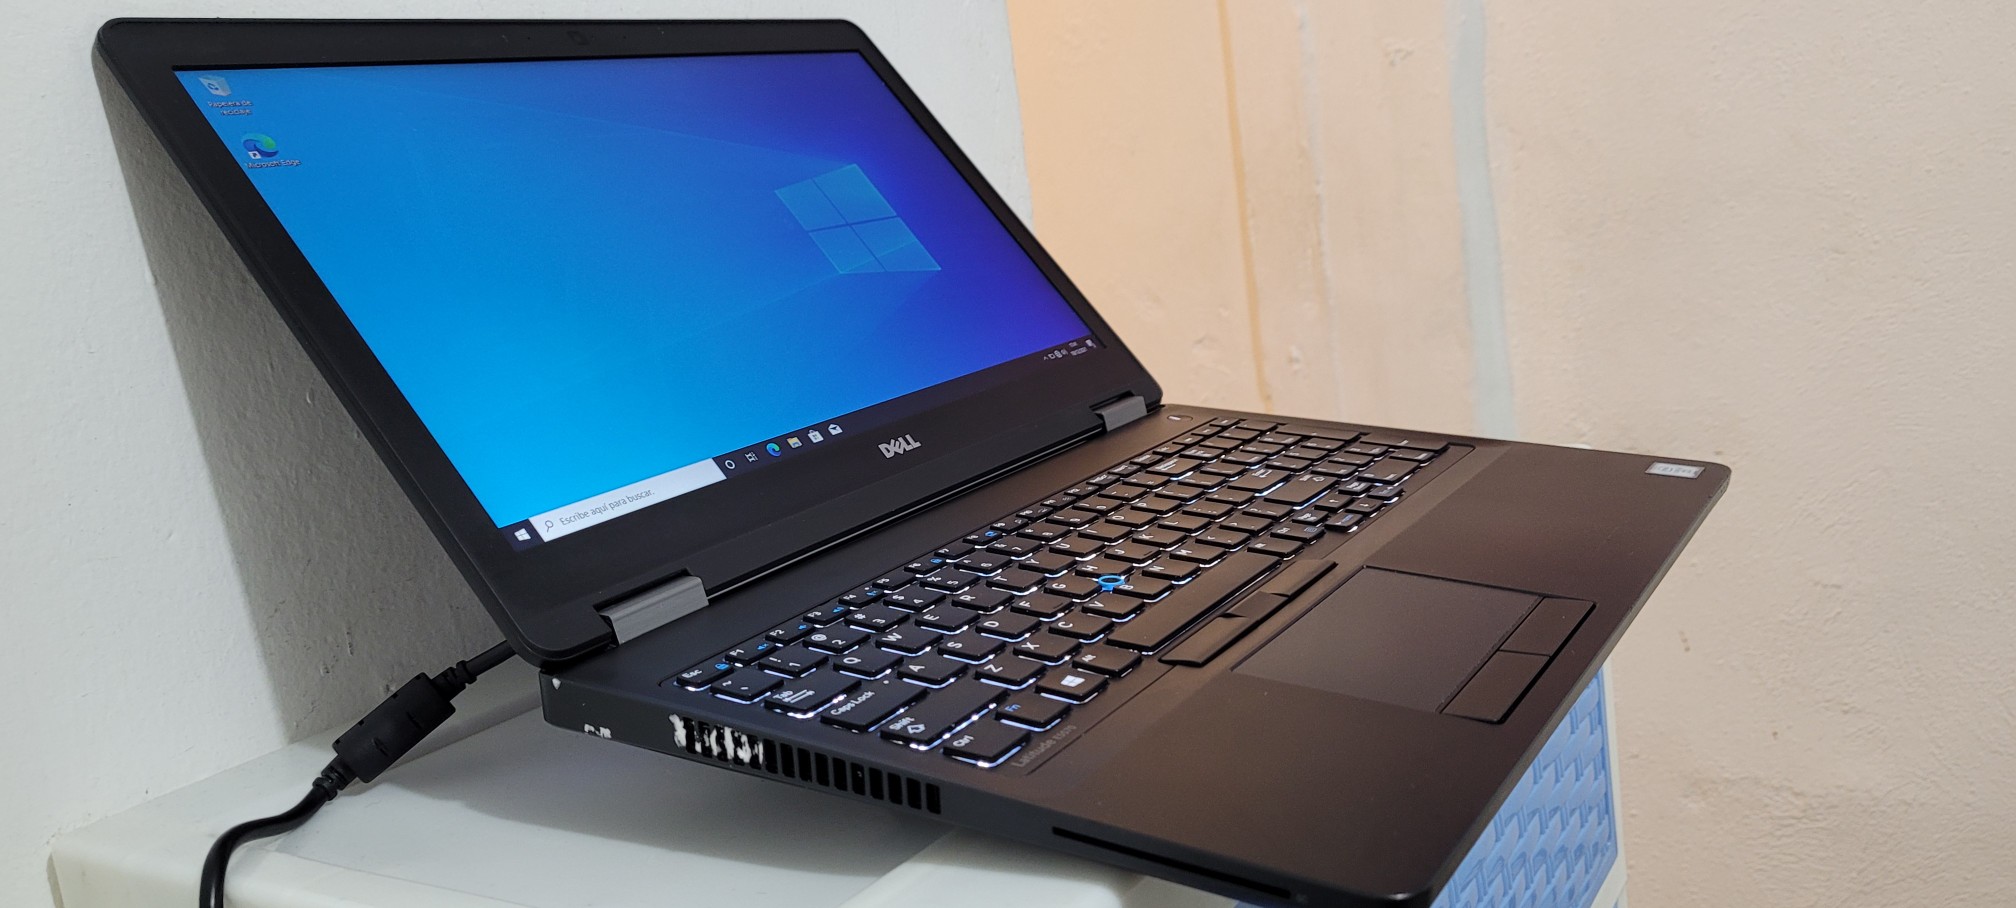 computadoras y laptops - Dell latirude 17 Pulg Core i7 Ram 8gb Disco 1000gb hdmi Full 1